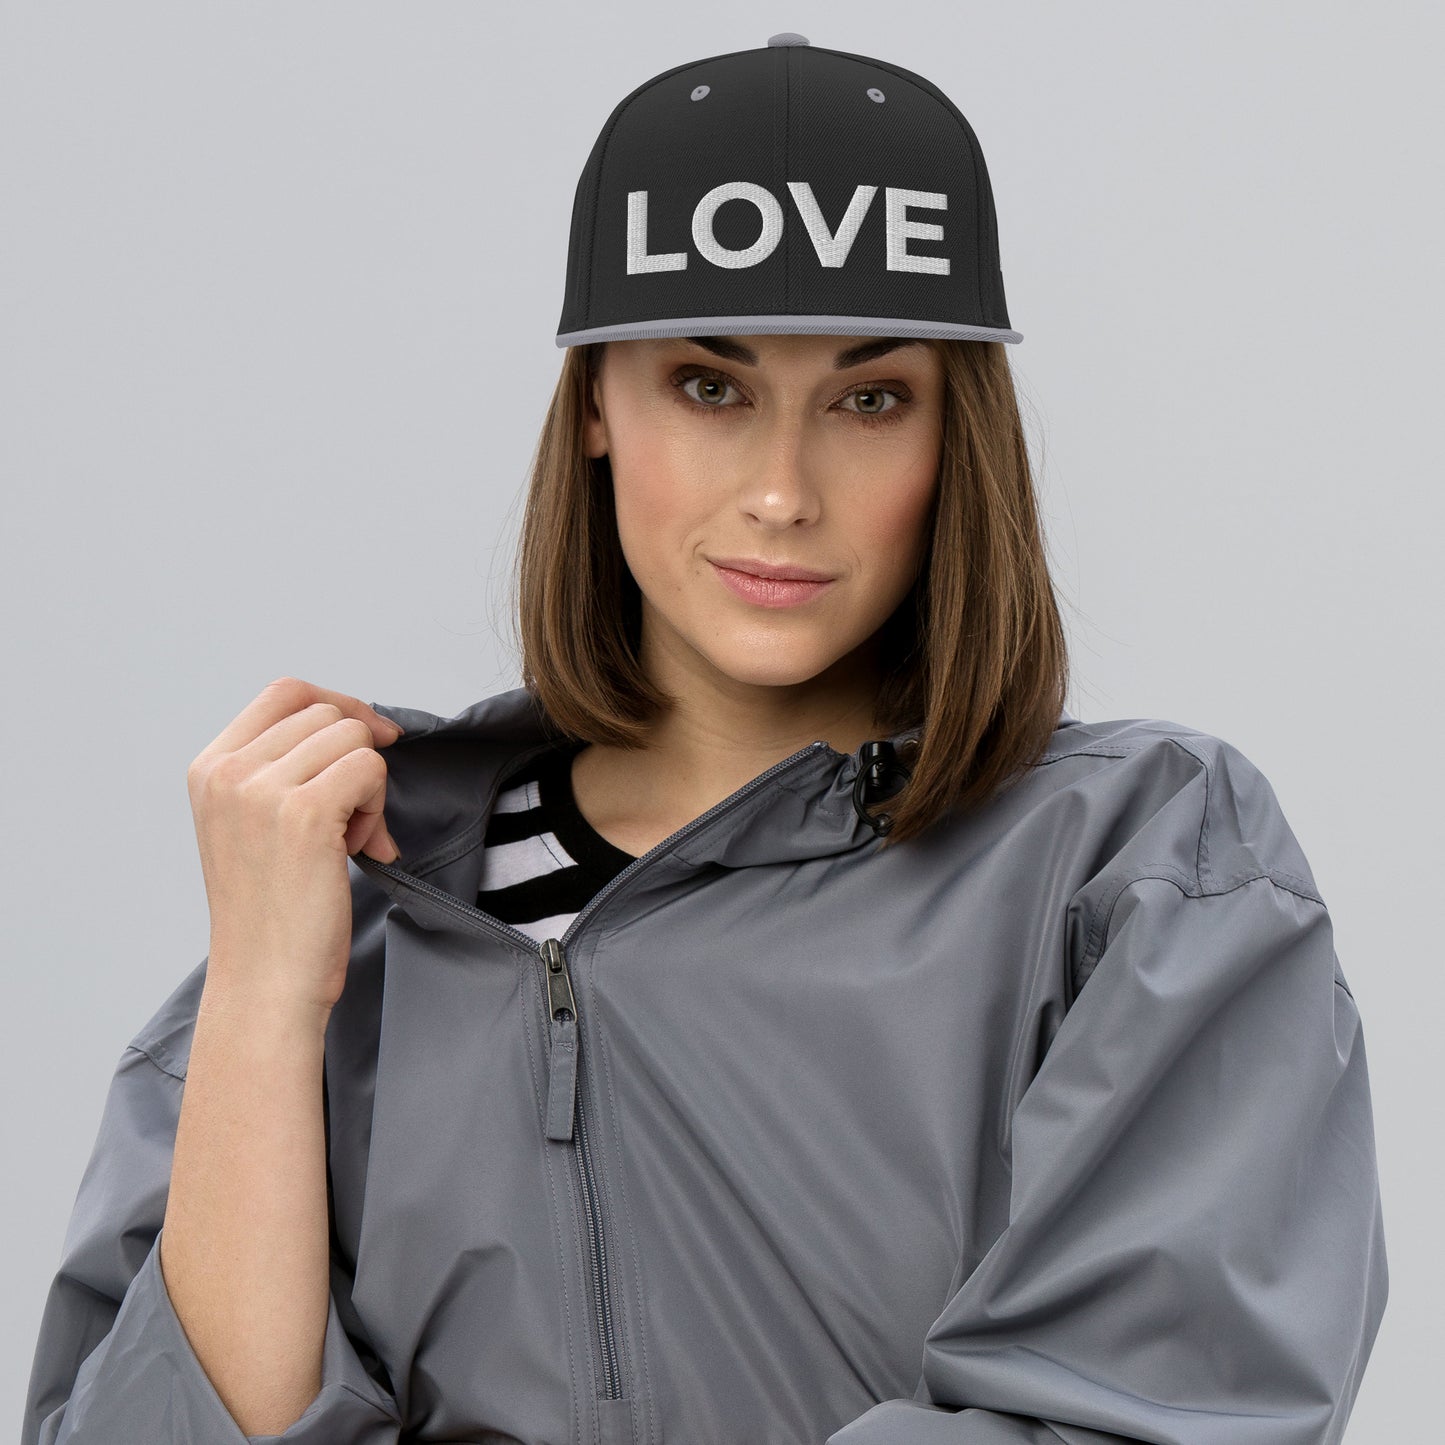 LOVE; Snapback Hat